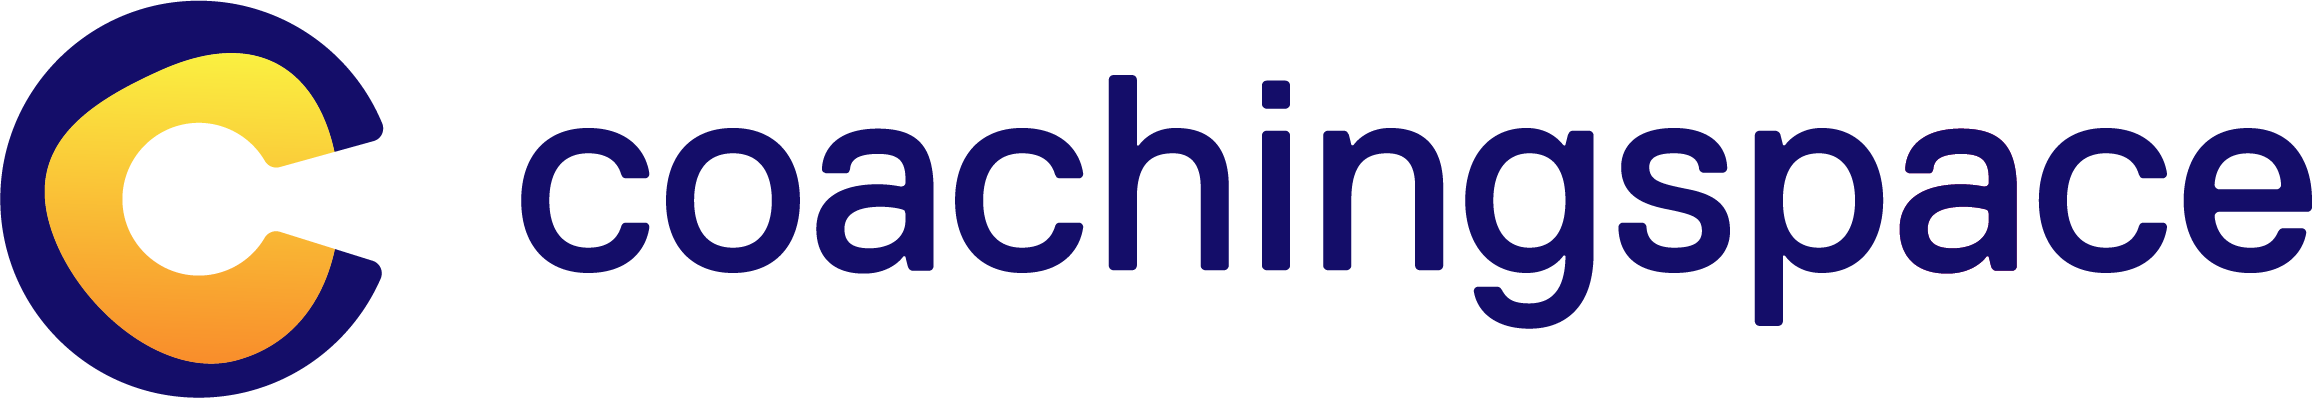 coachingspache logo blue rgb